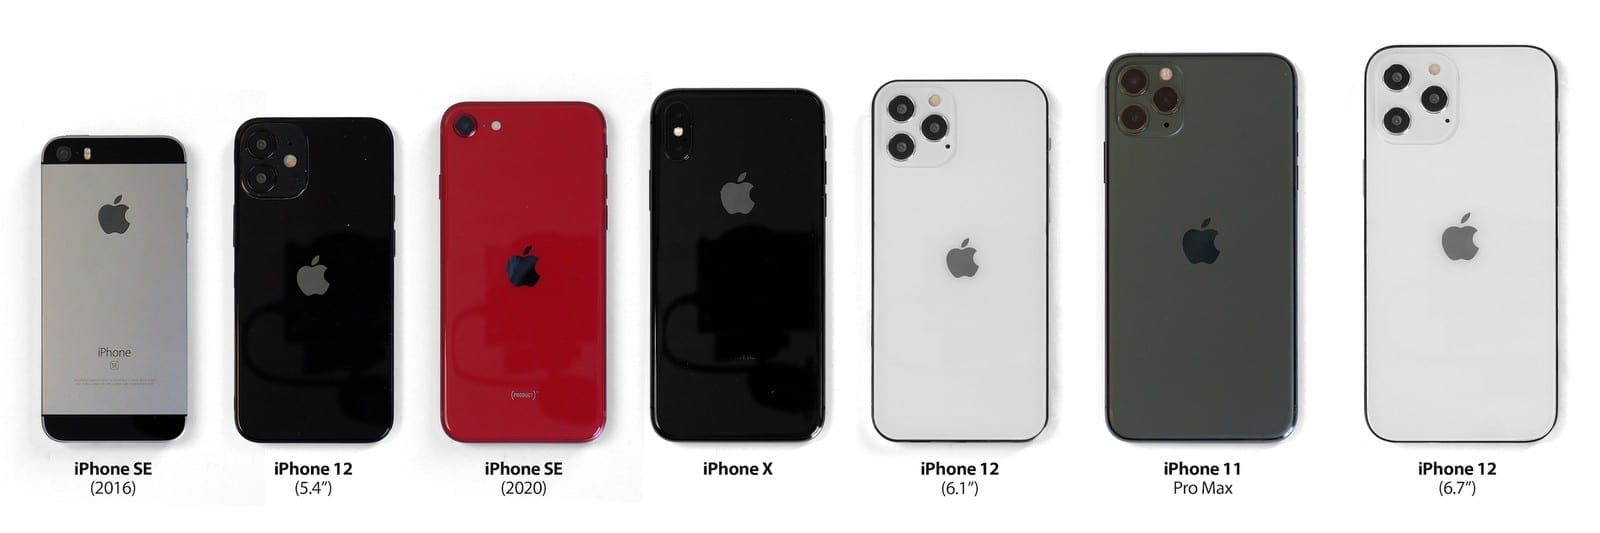 apple iphone 12 Lineup